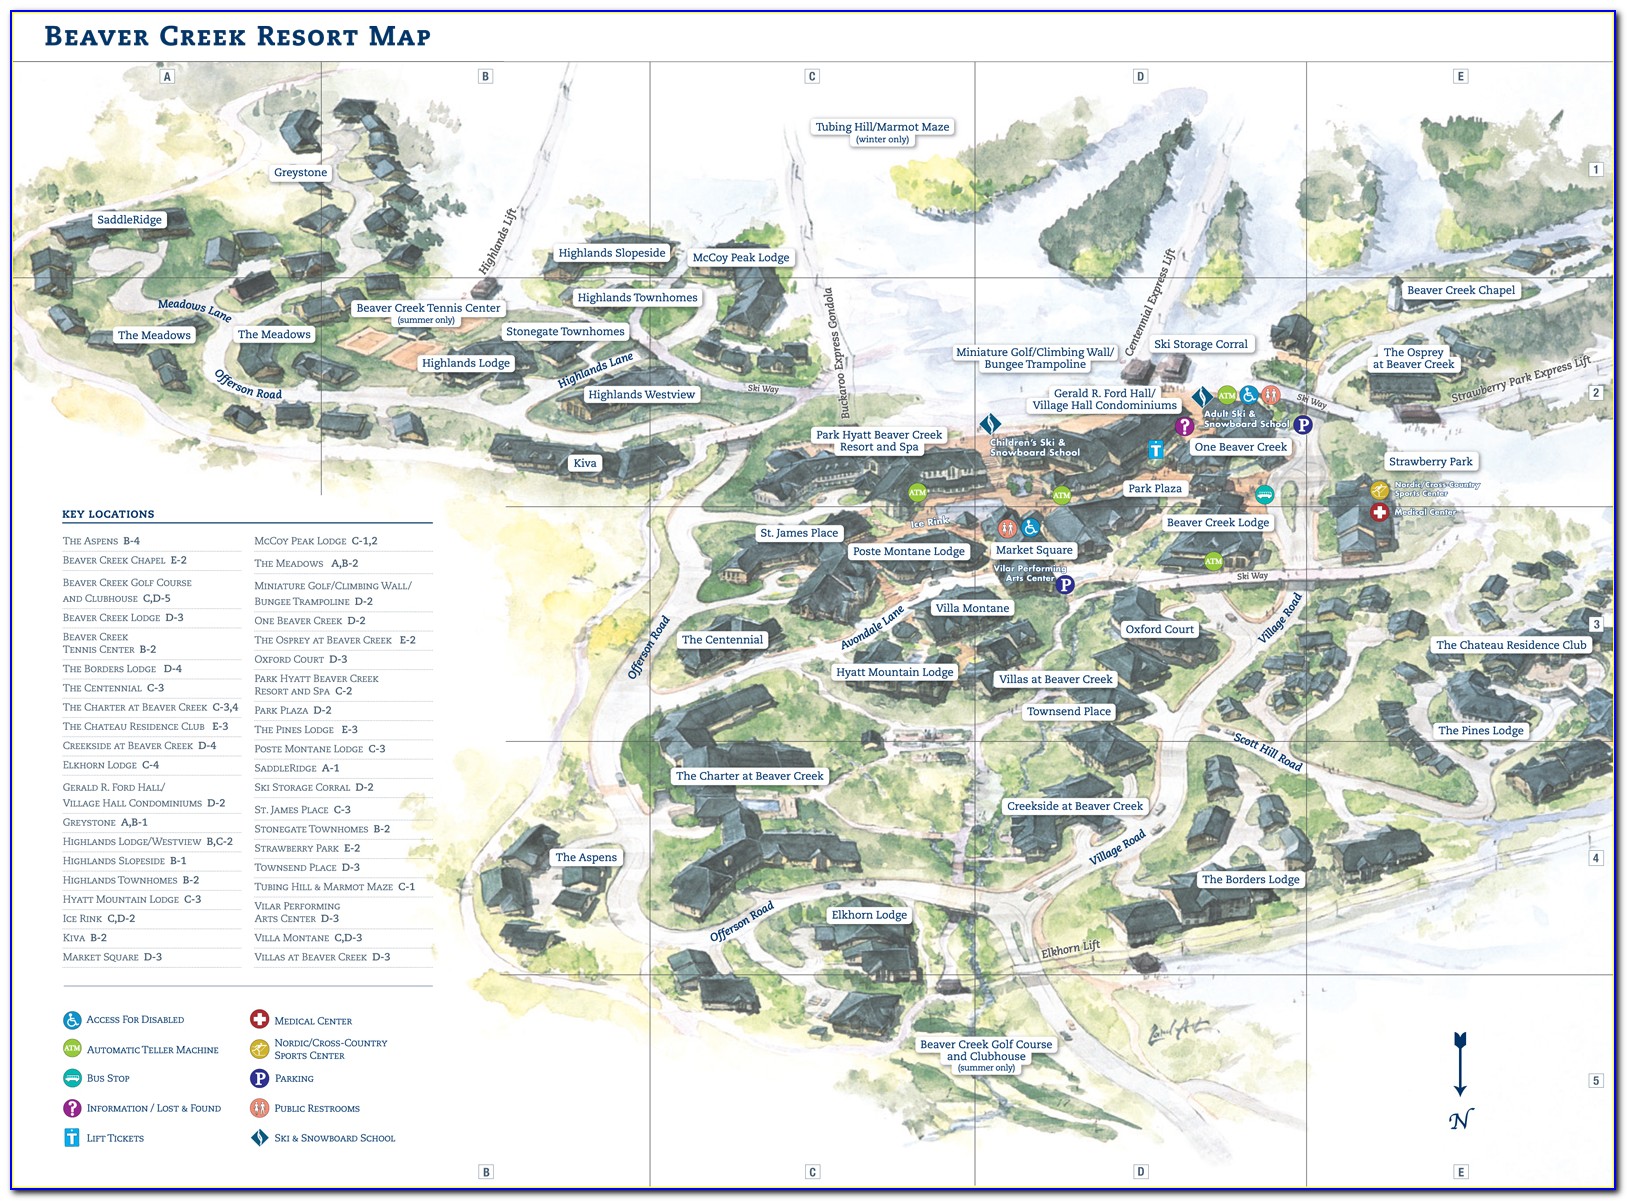 Beaver Creek Lodging Map